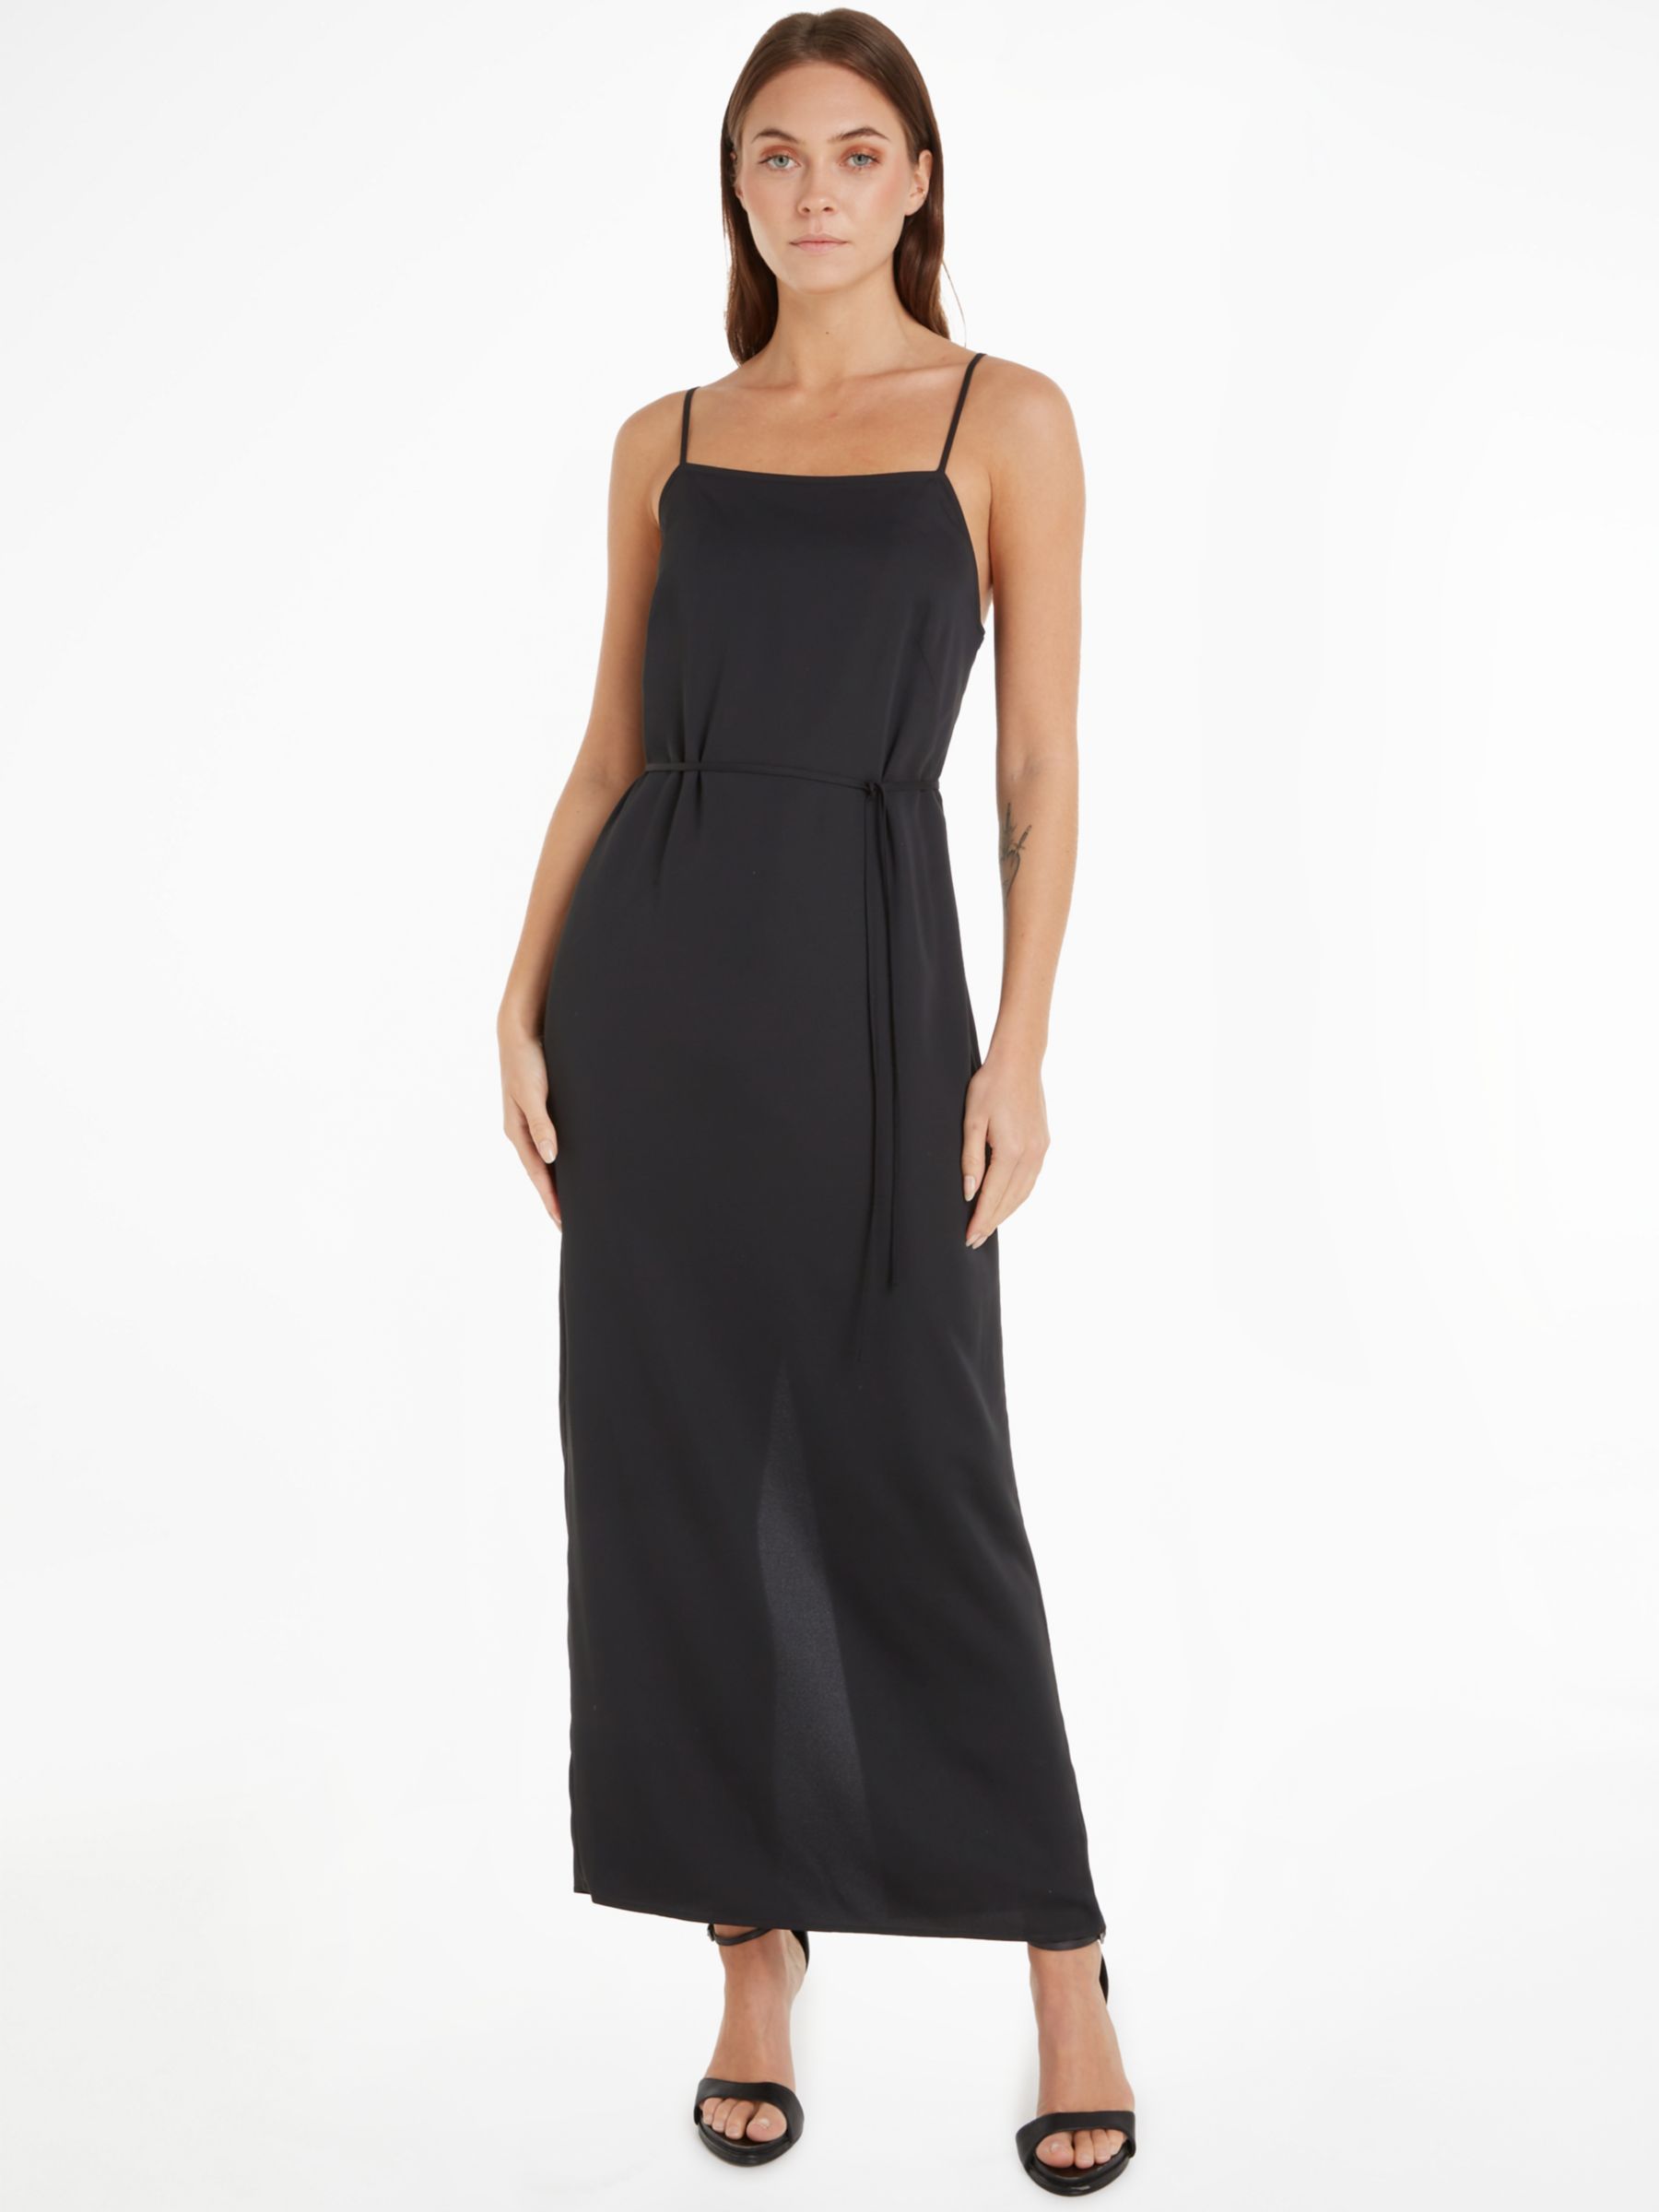 Calvin Klein Plain Belted Square Neck Midi Dress, CK Black, 10